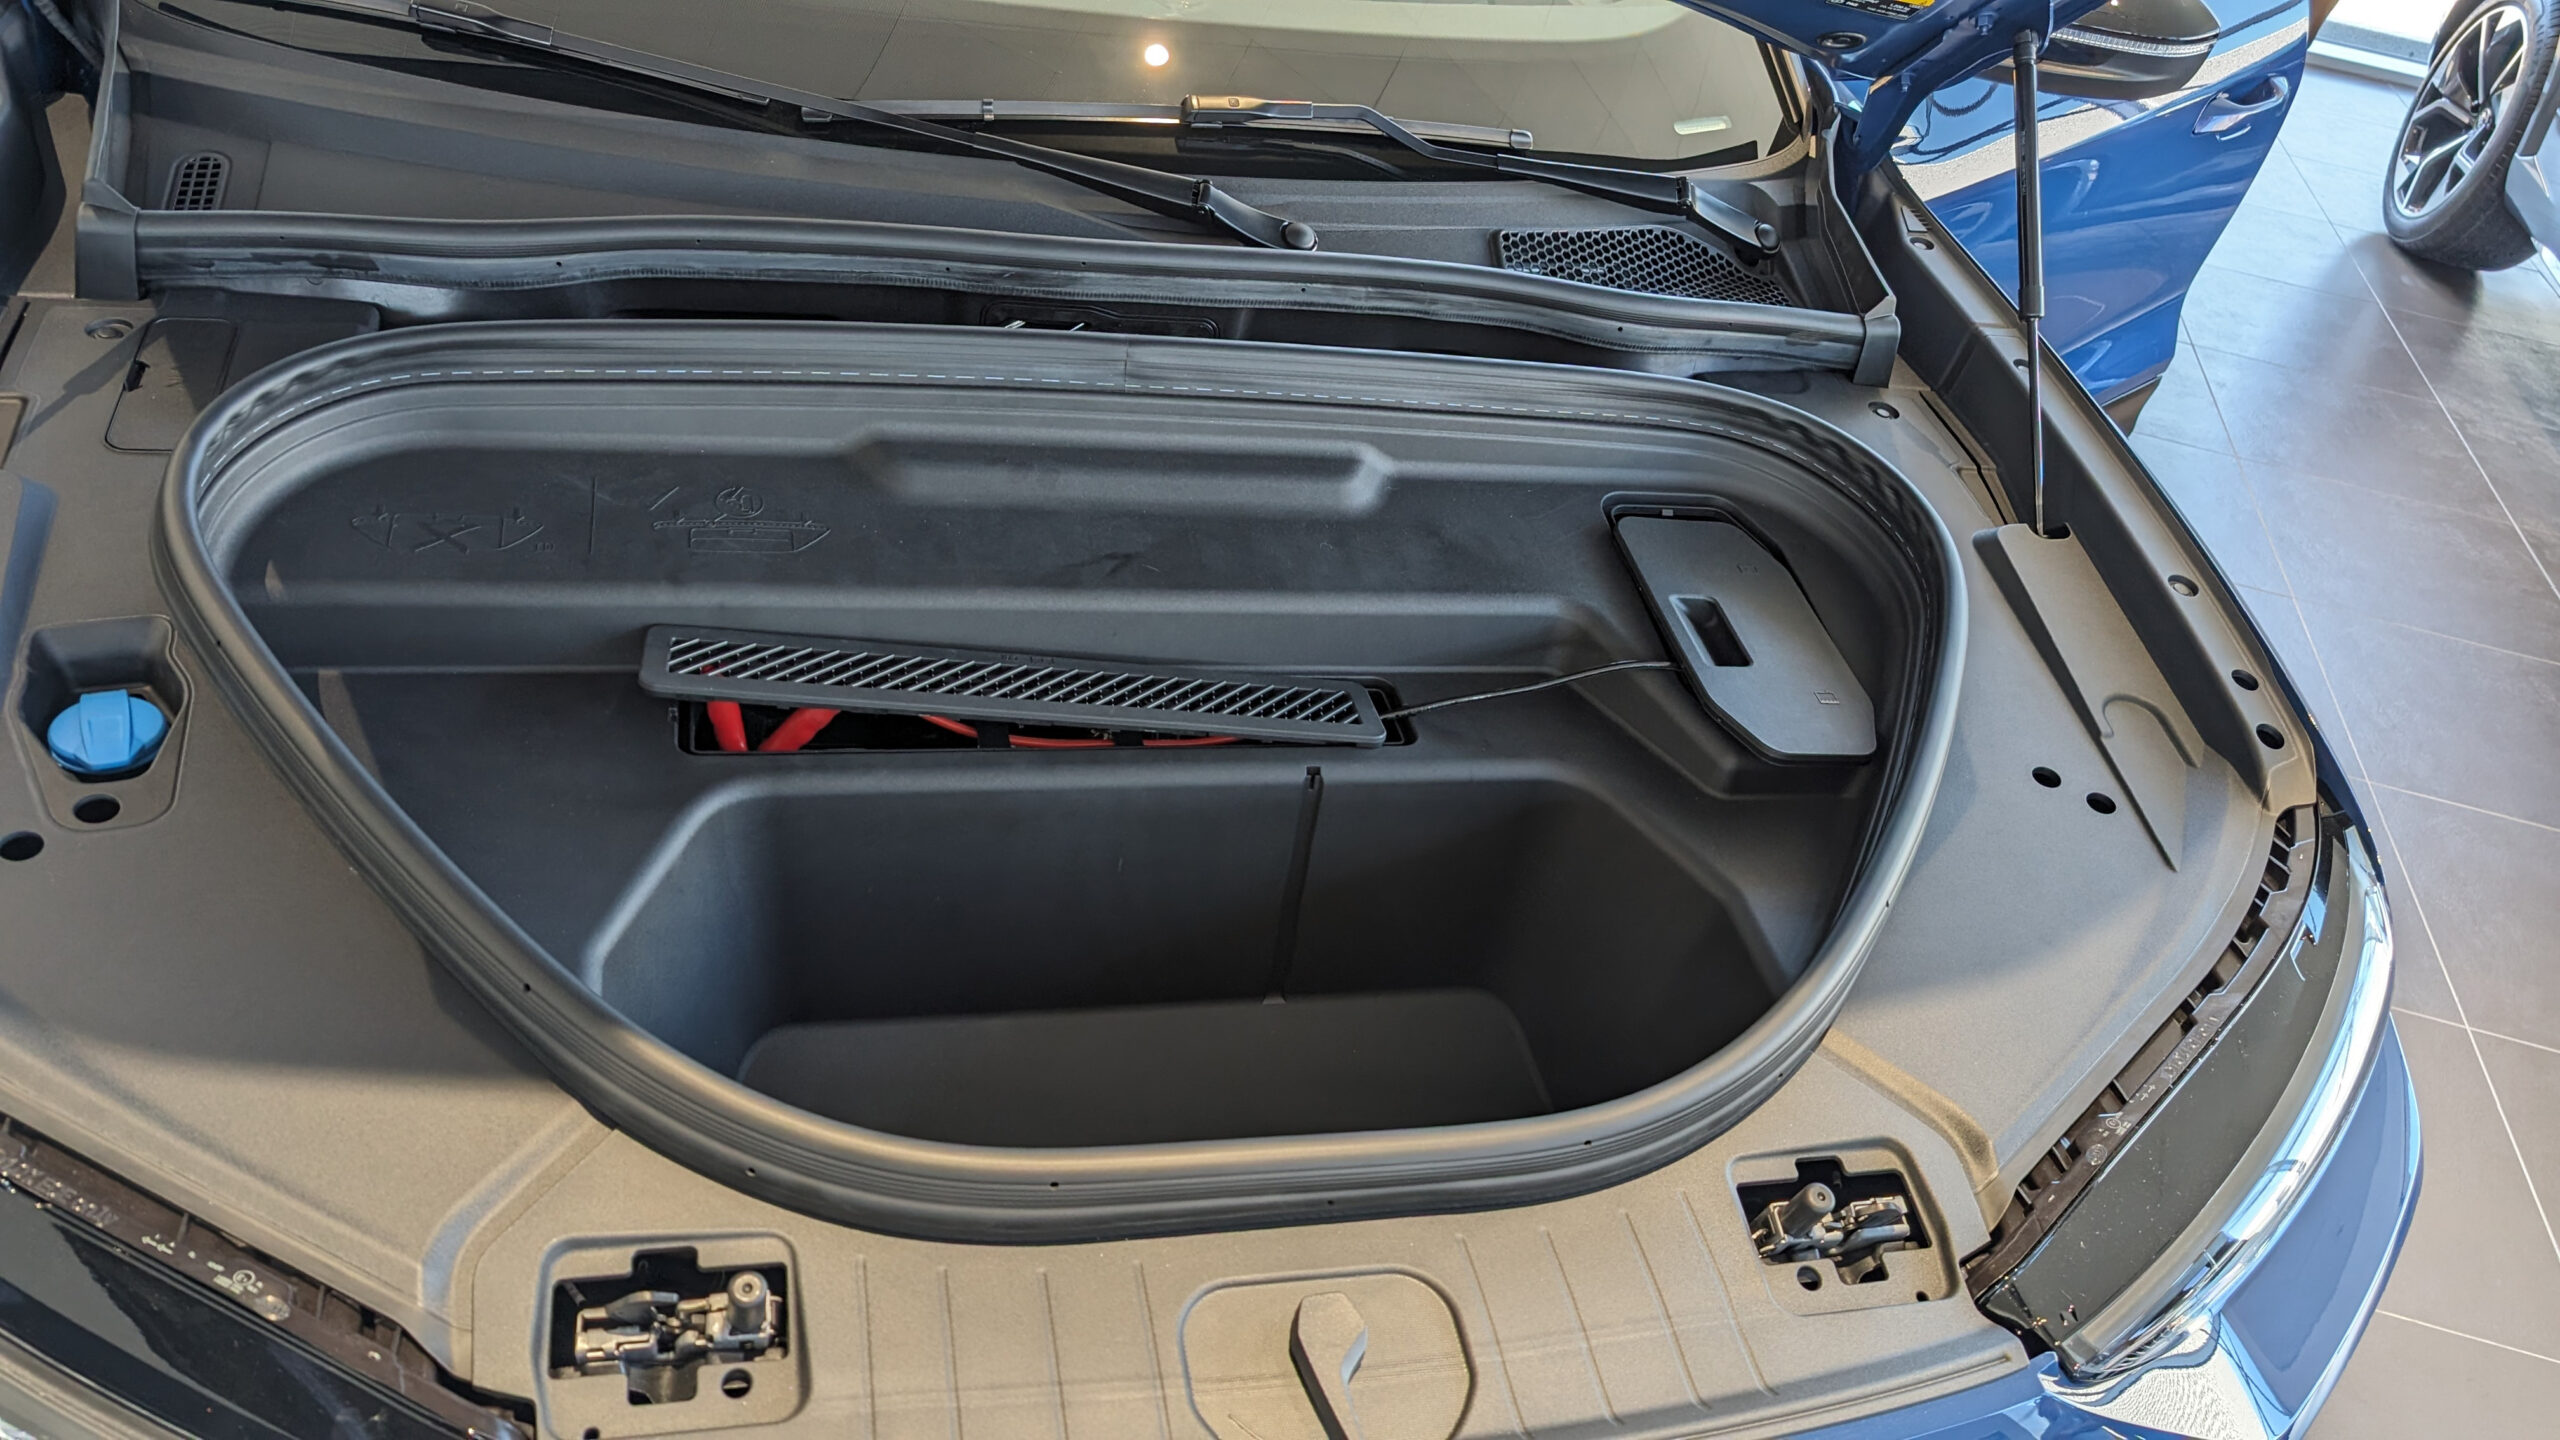 Audi Q6 e-tron frunk